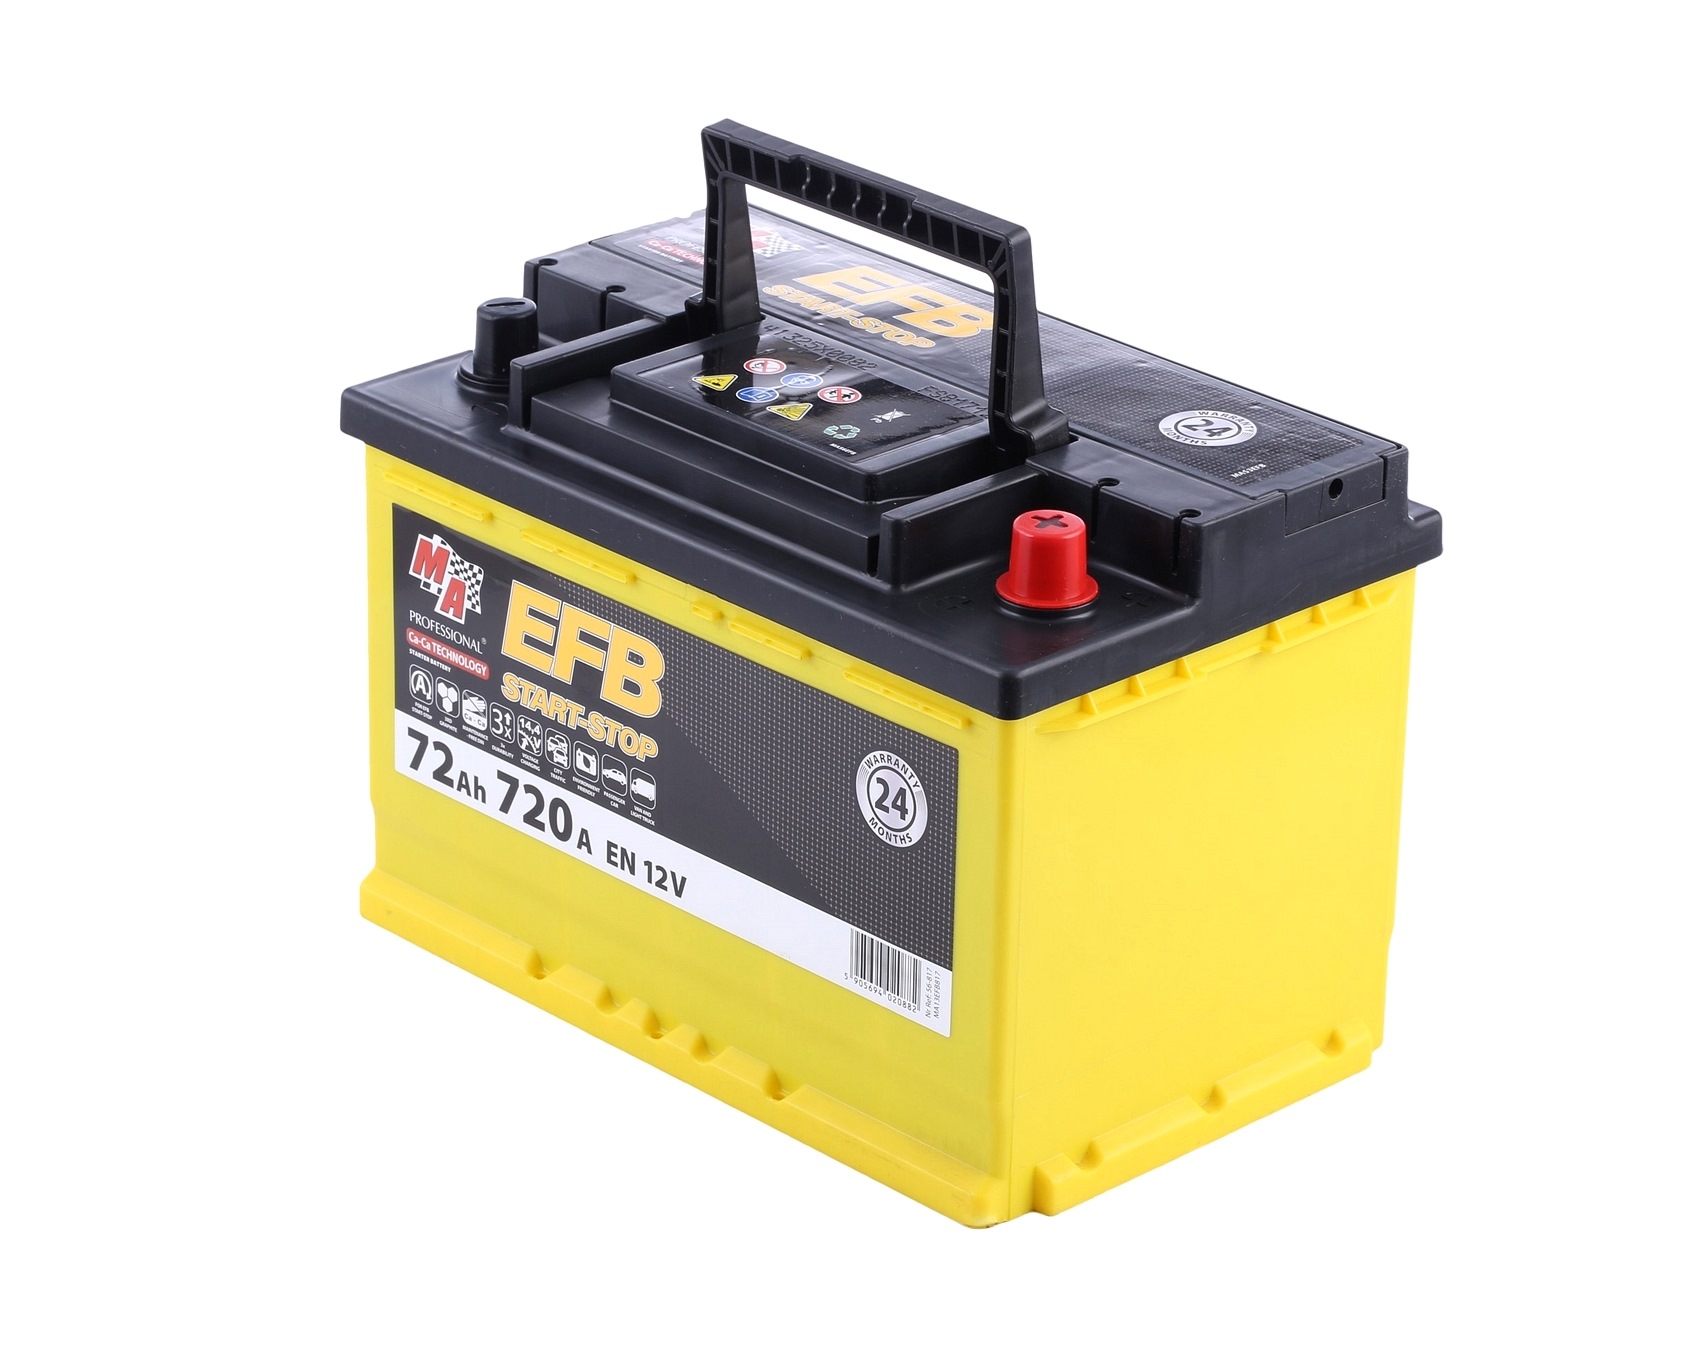 ▷ Batterie Exide EL700 70Ah Start-Stop